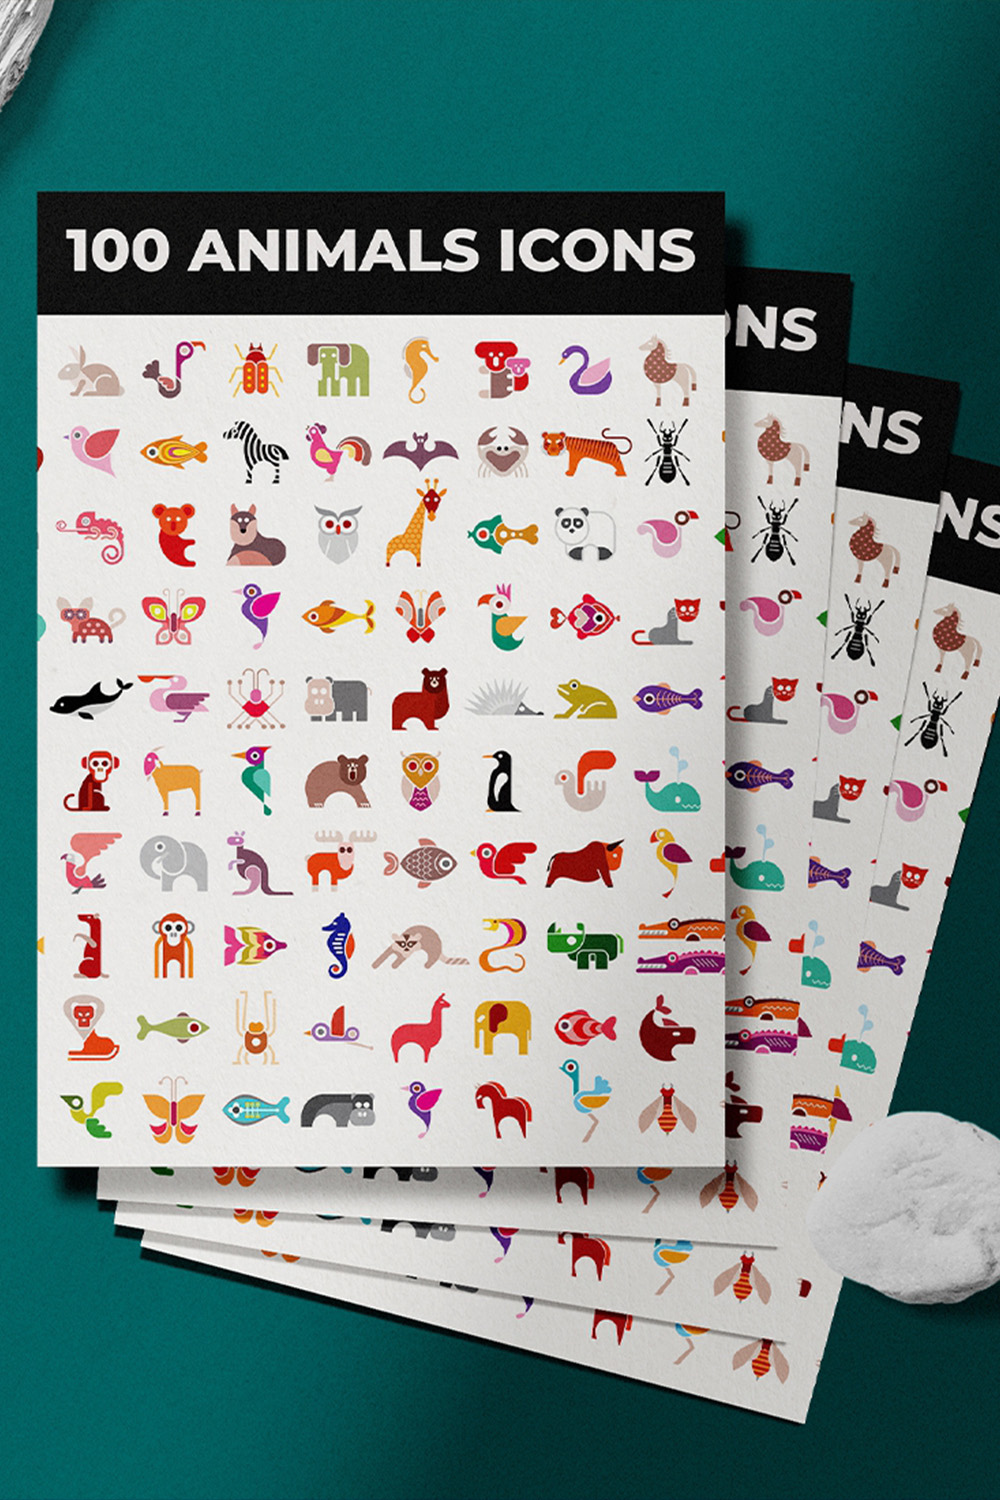 Animals Vector Icons Designs pinterest image.